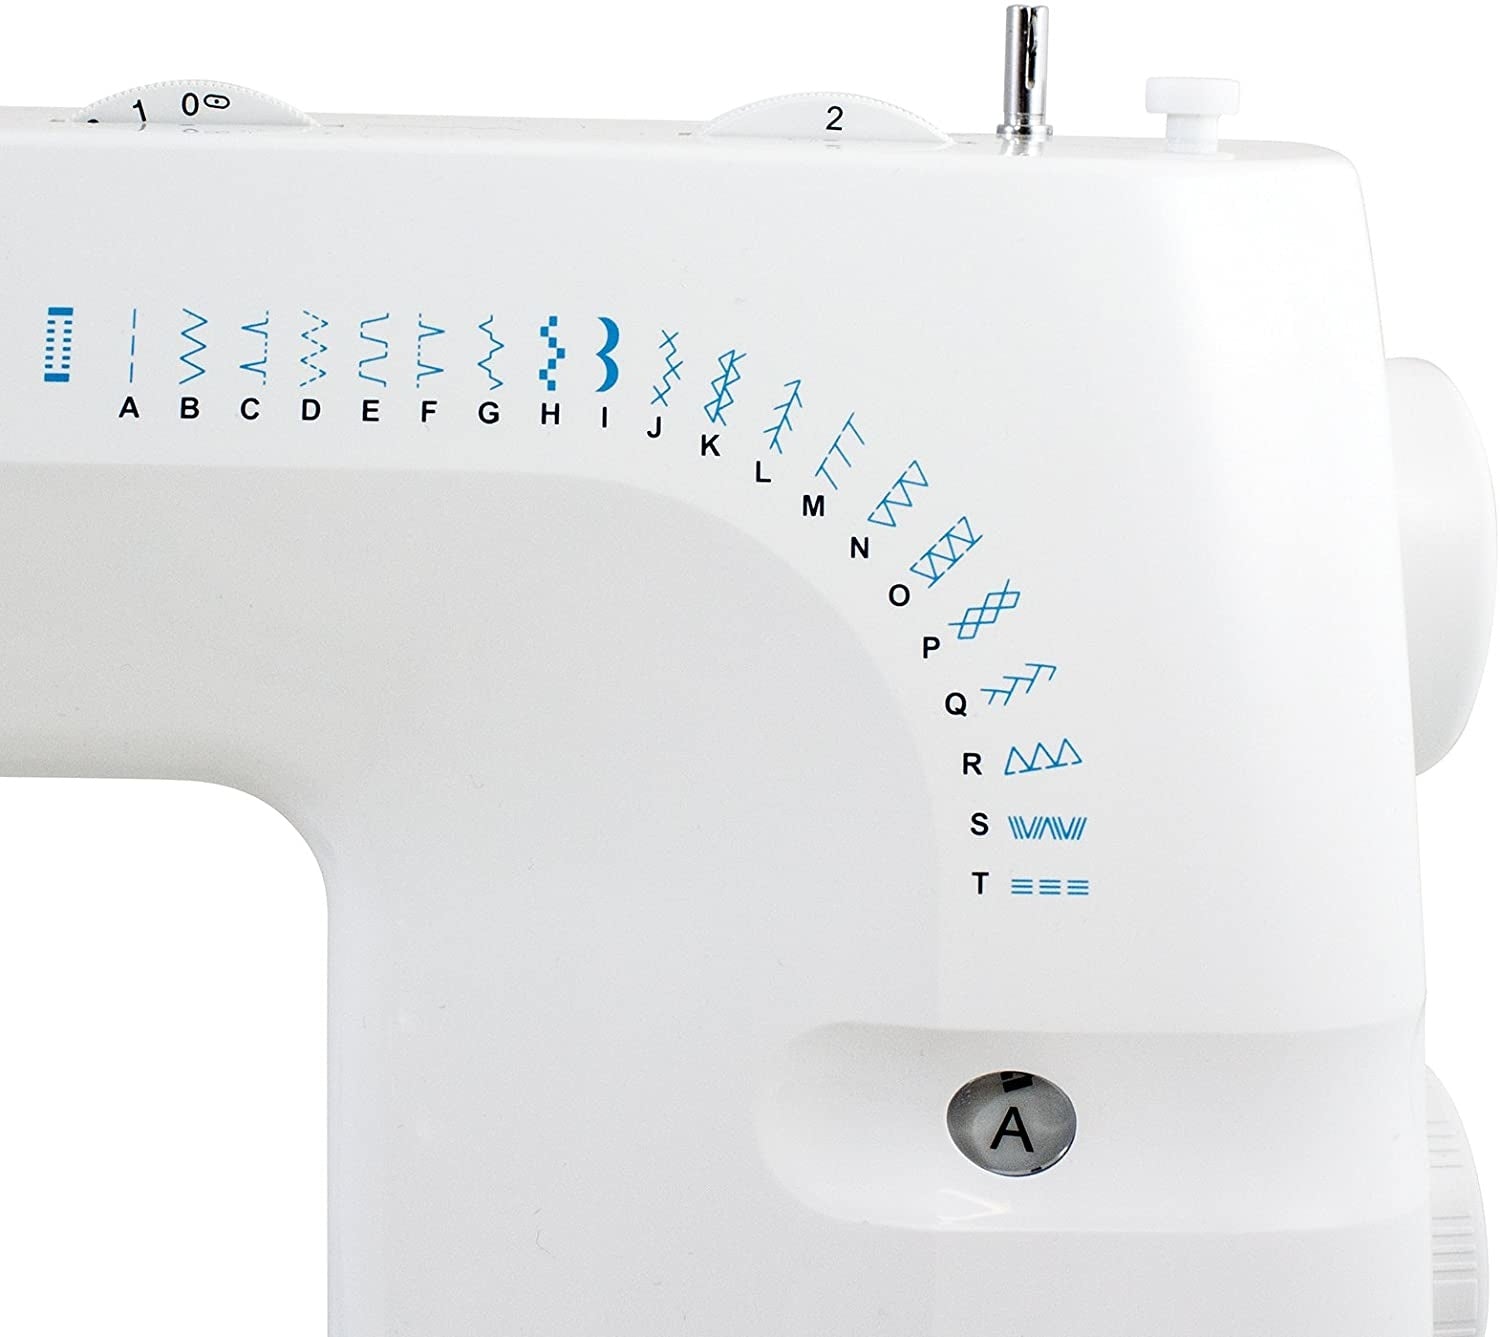 Juki HZL-353ZR-C Compact Basic Sewing Machine